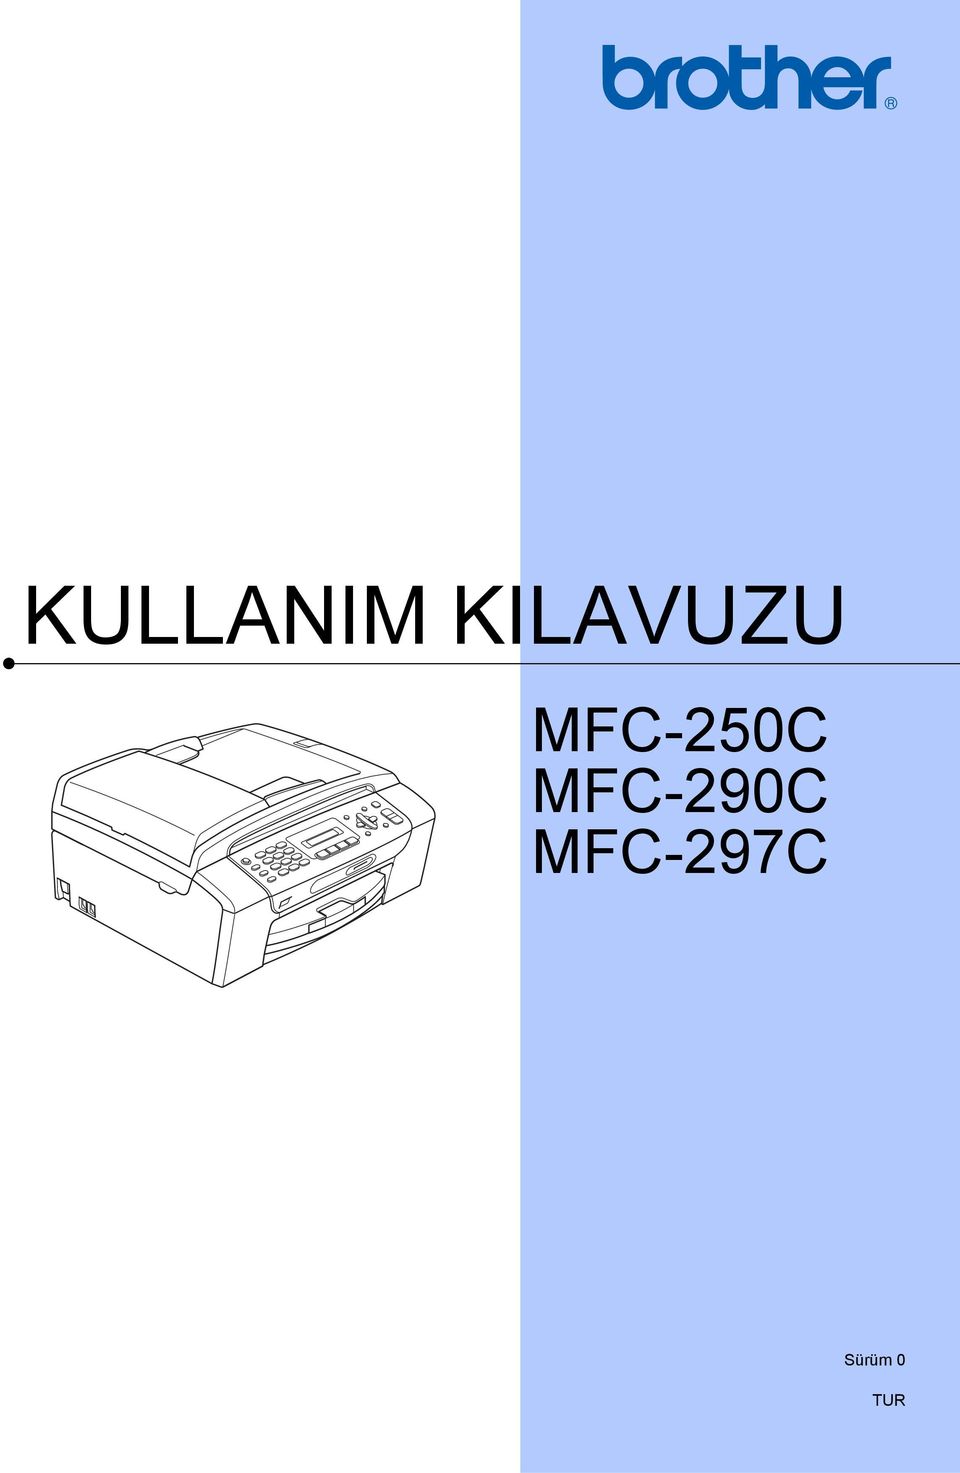 MFC-250C